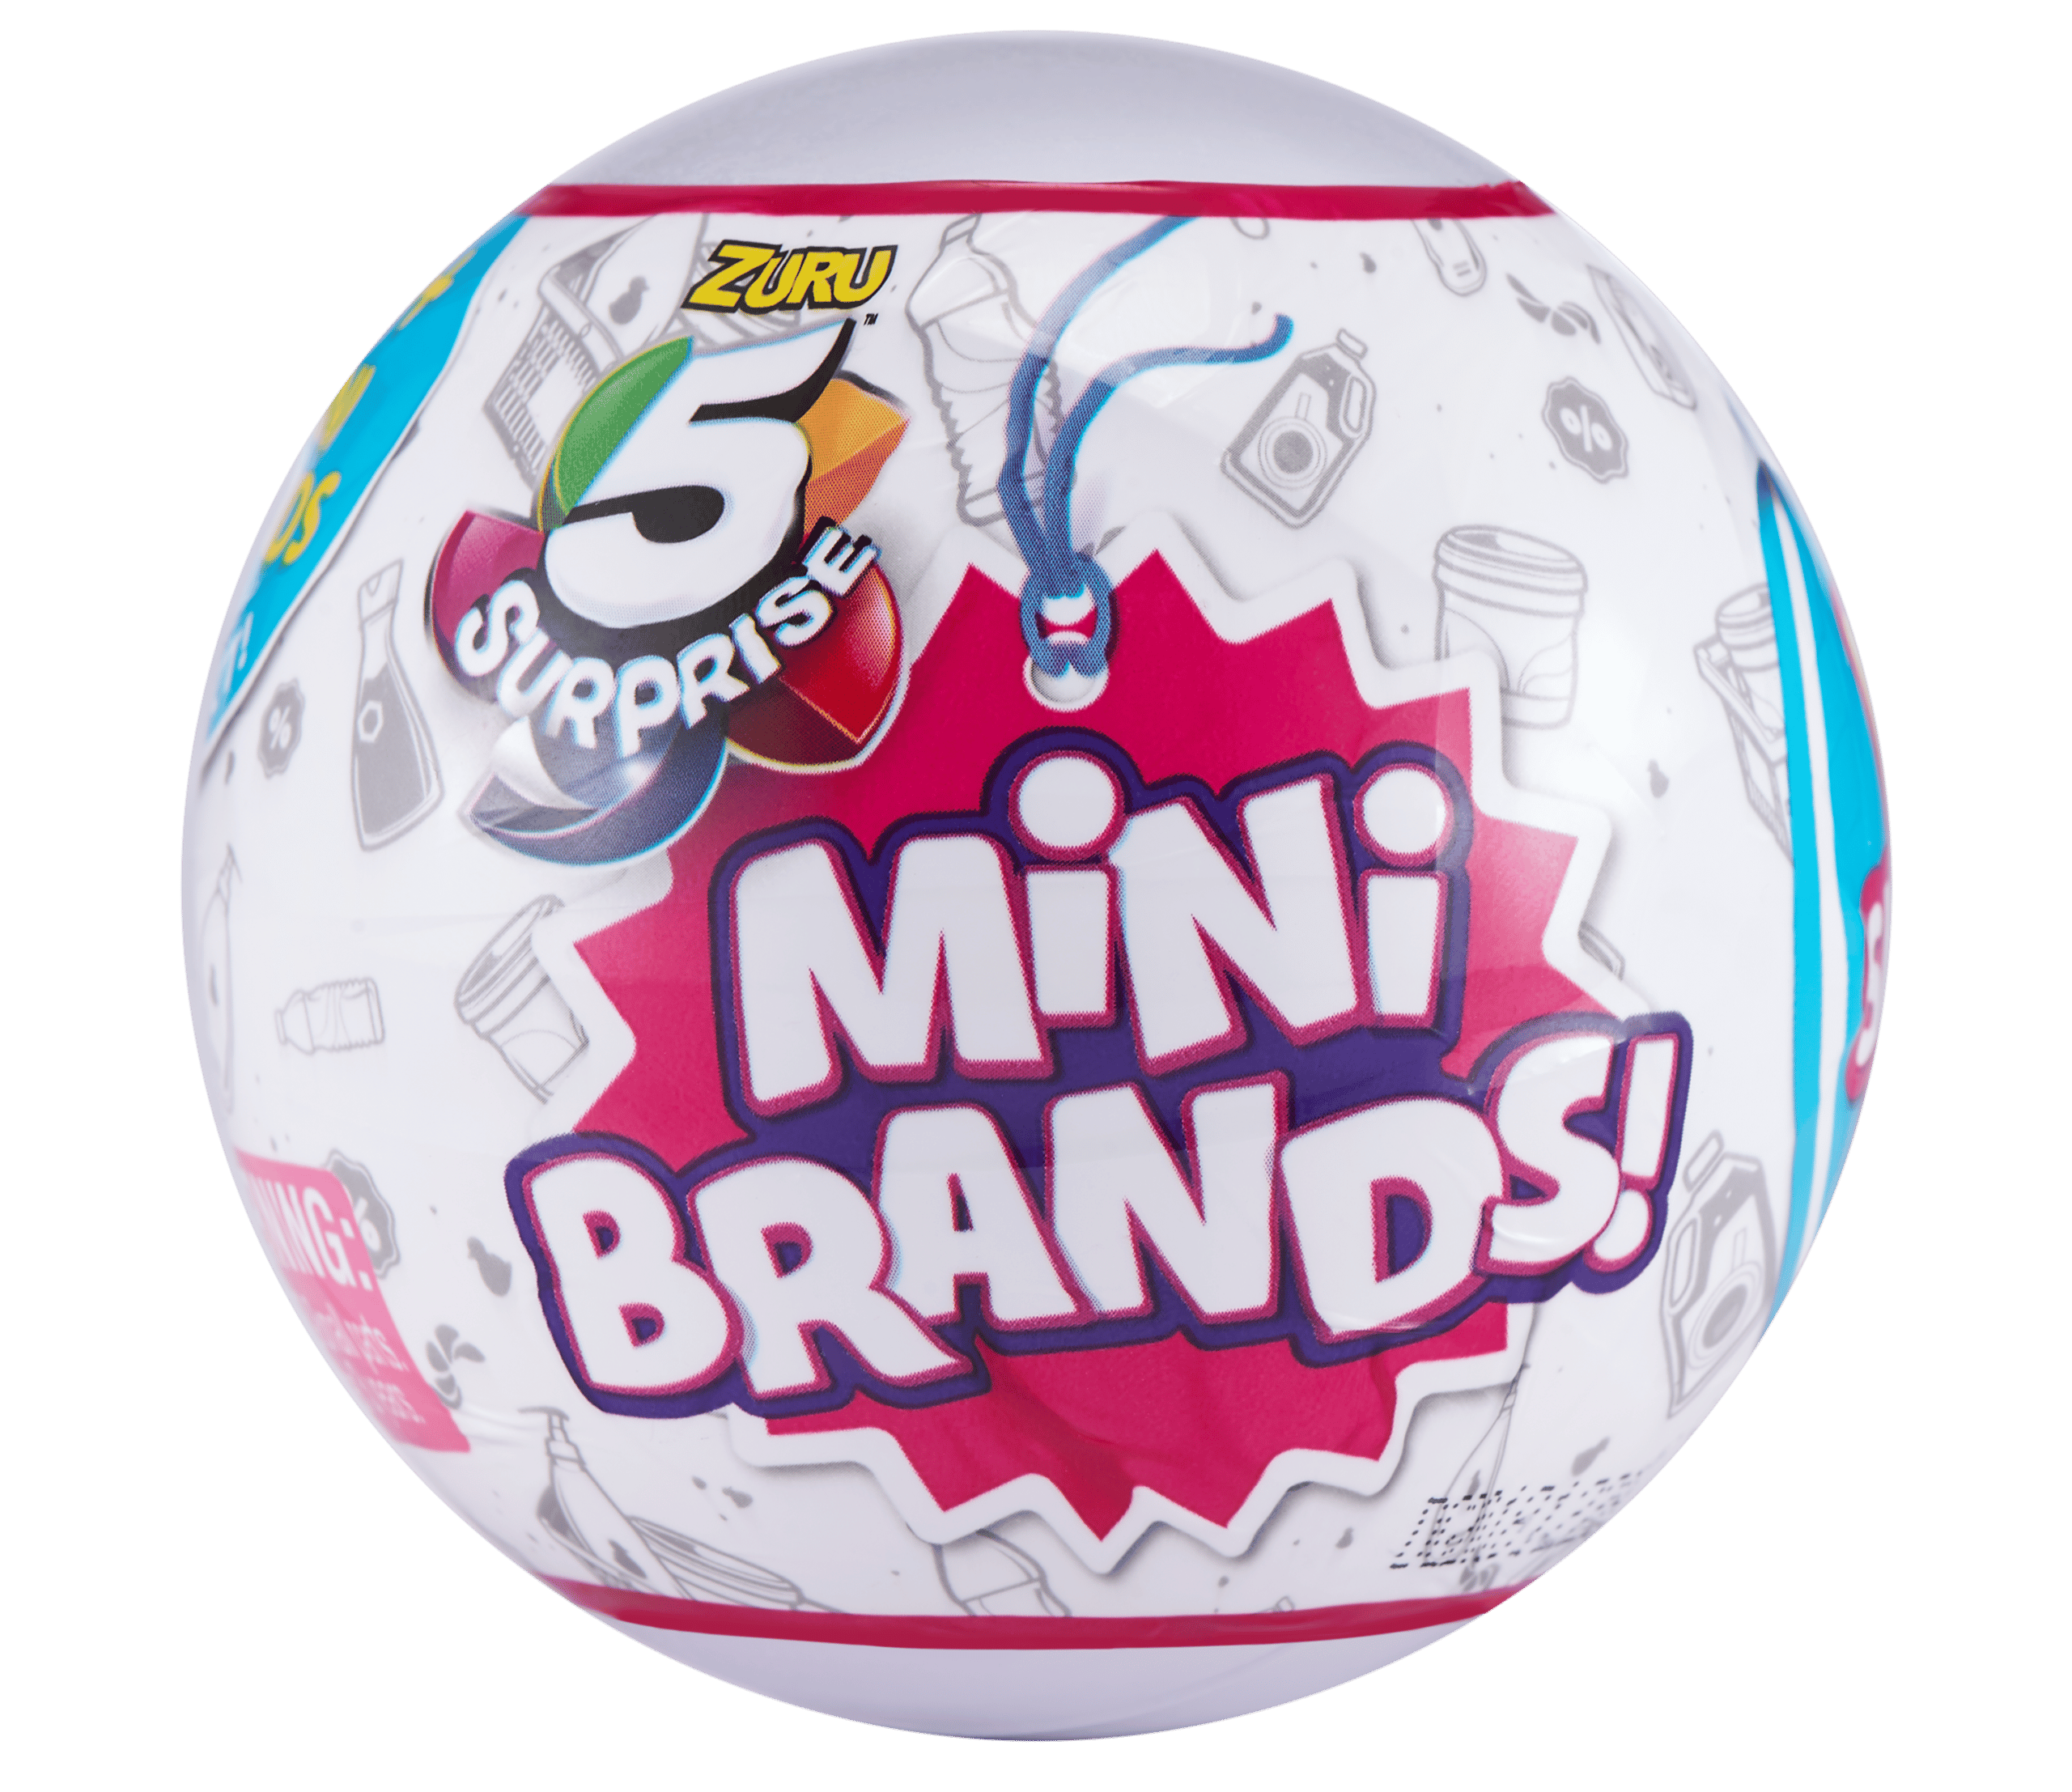 In Stock 5 Surprise Mini Brands Ball 2022 - Zuru Surprise Ball For Cheap on Amazon